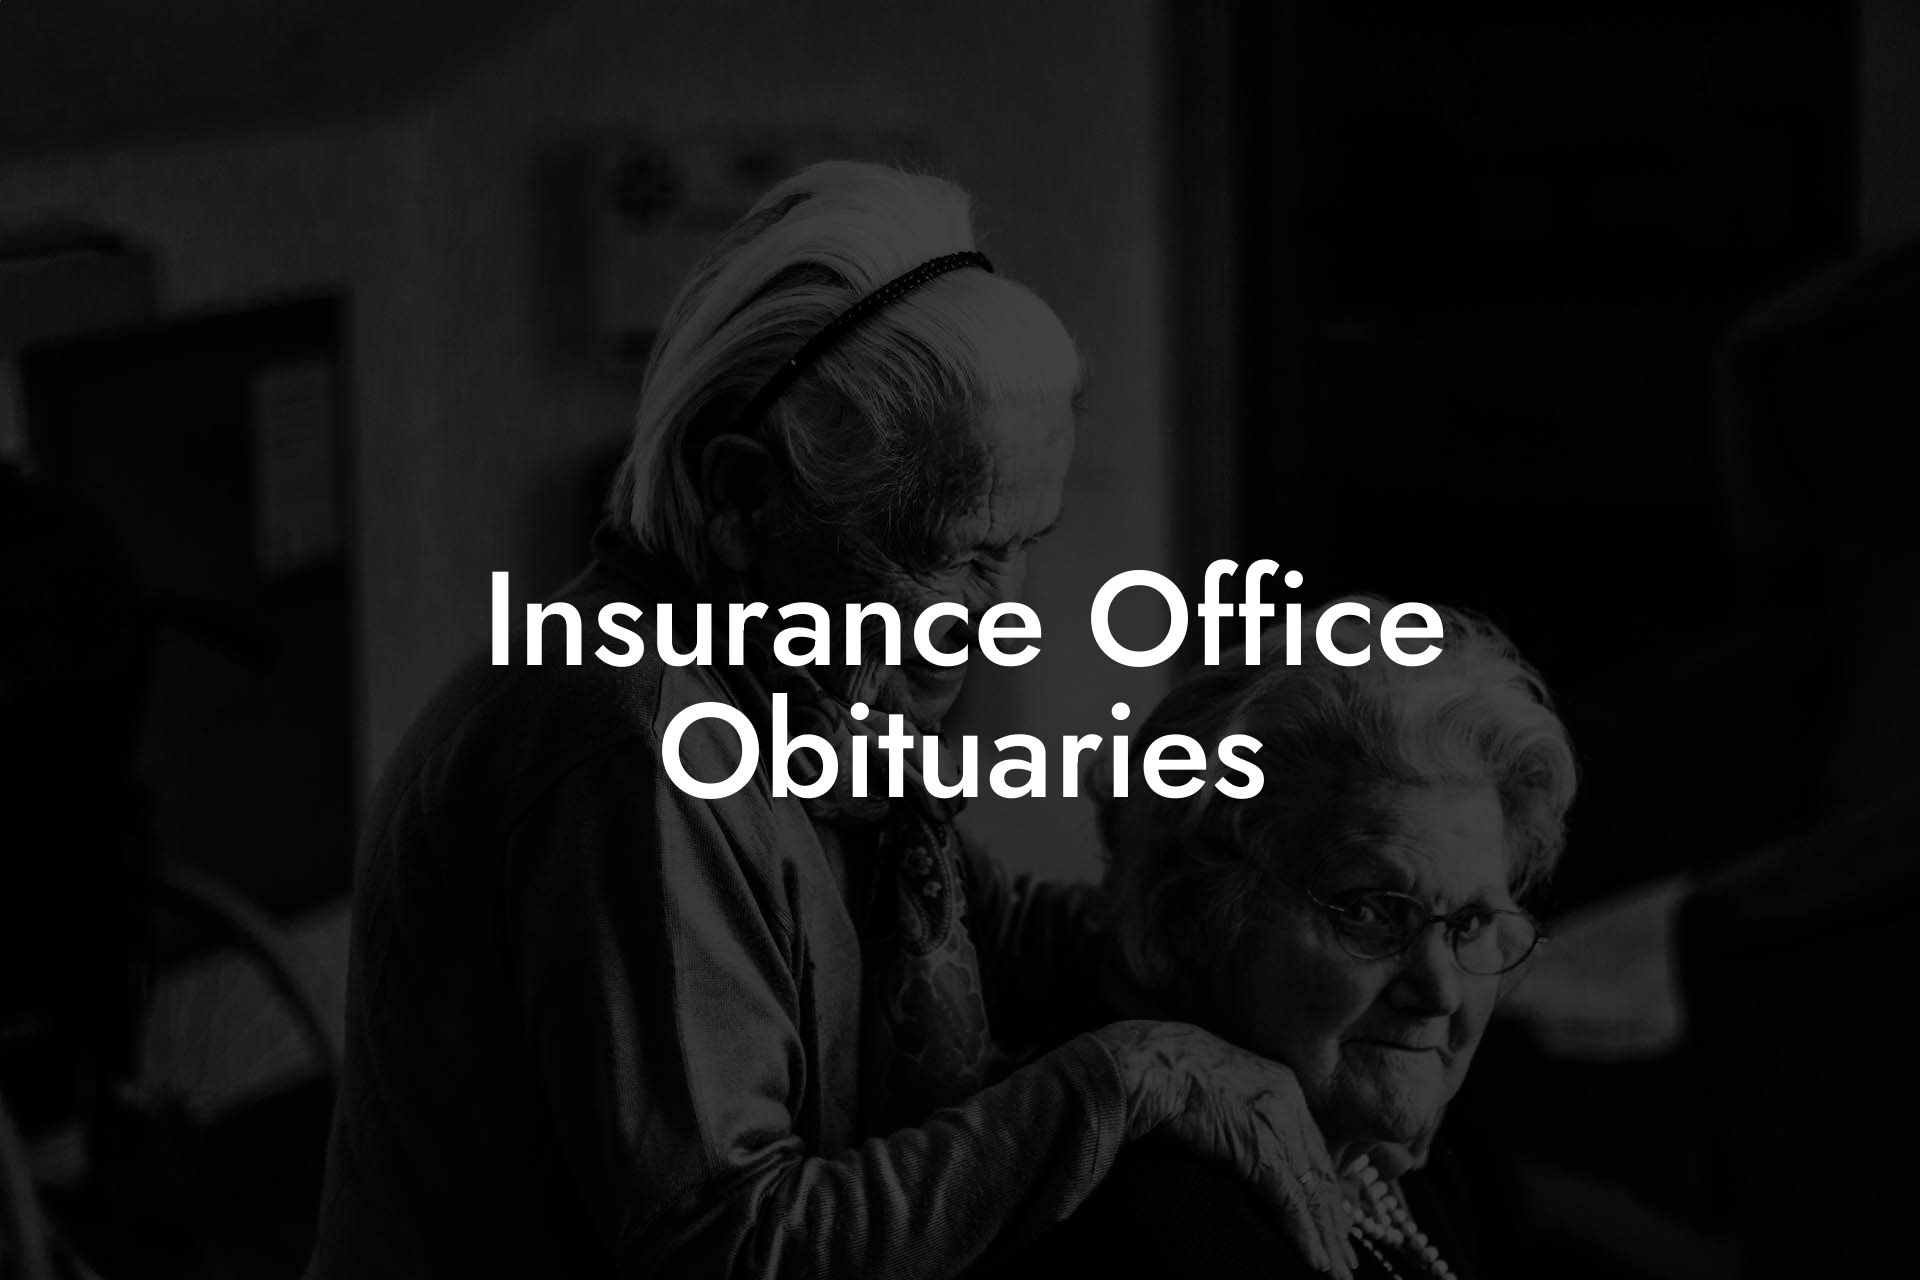 Insurance Office Obituaries